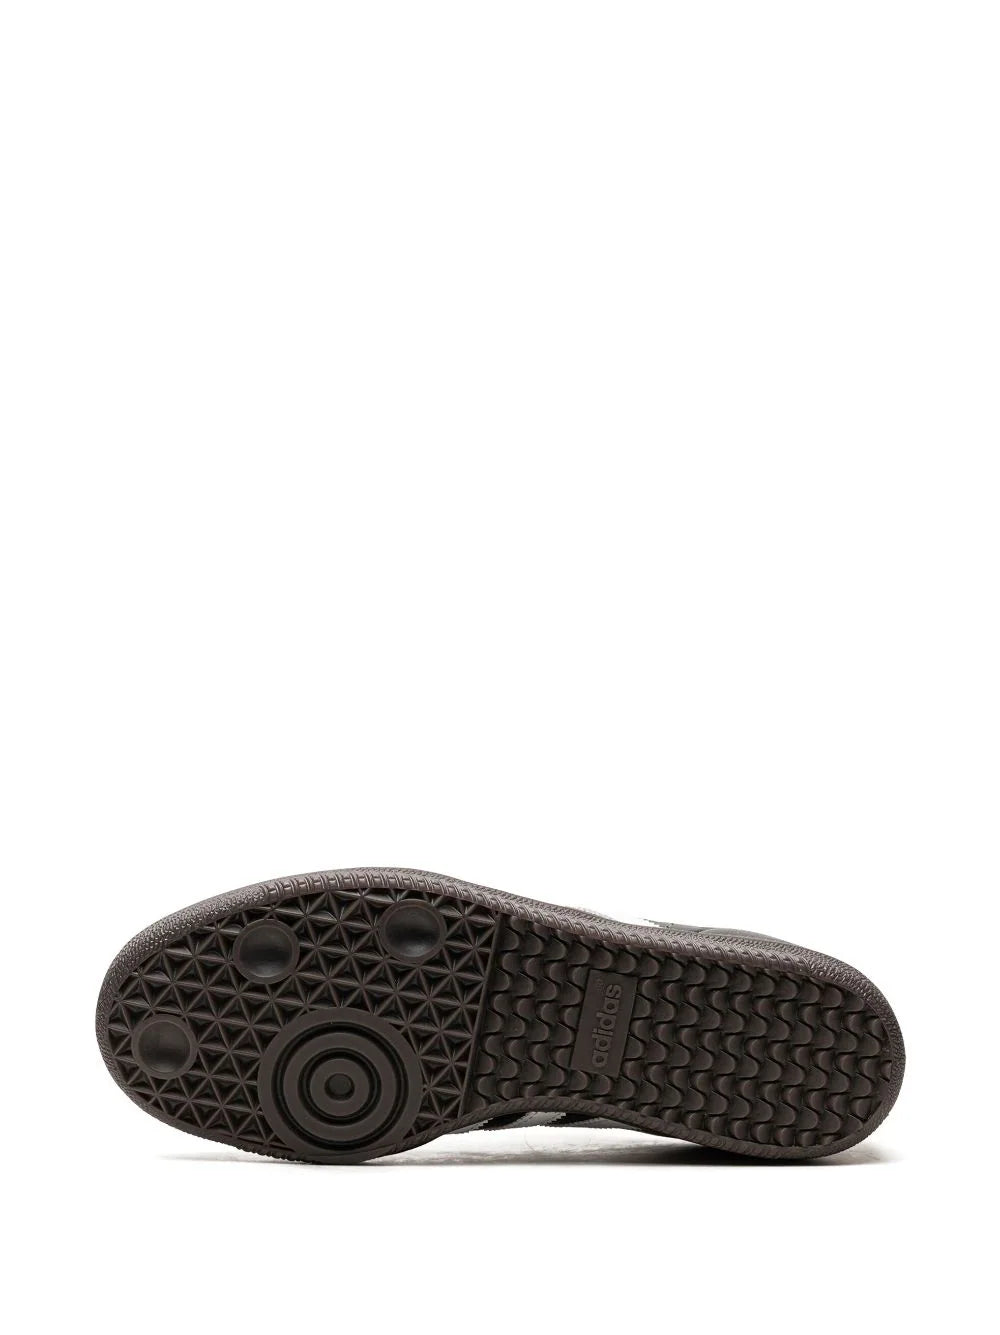 Shoellist | adidas Samba ADV "Black" sneakers